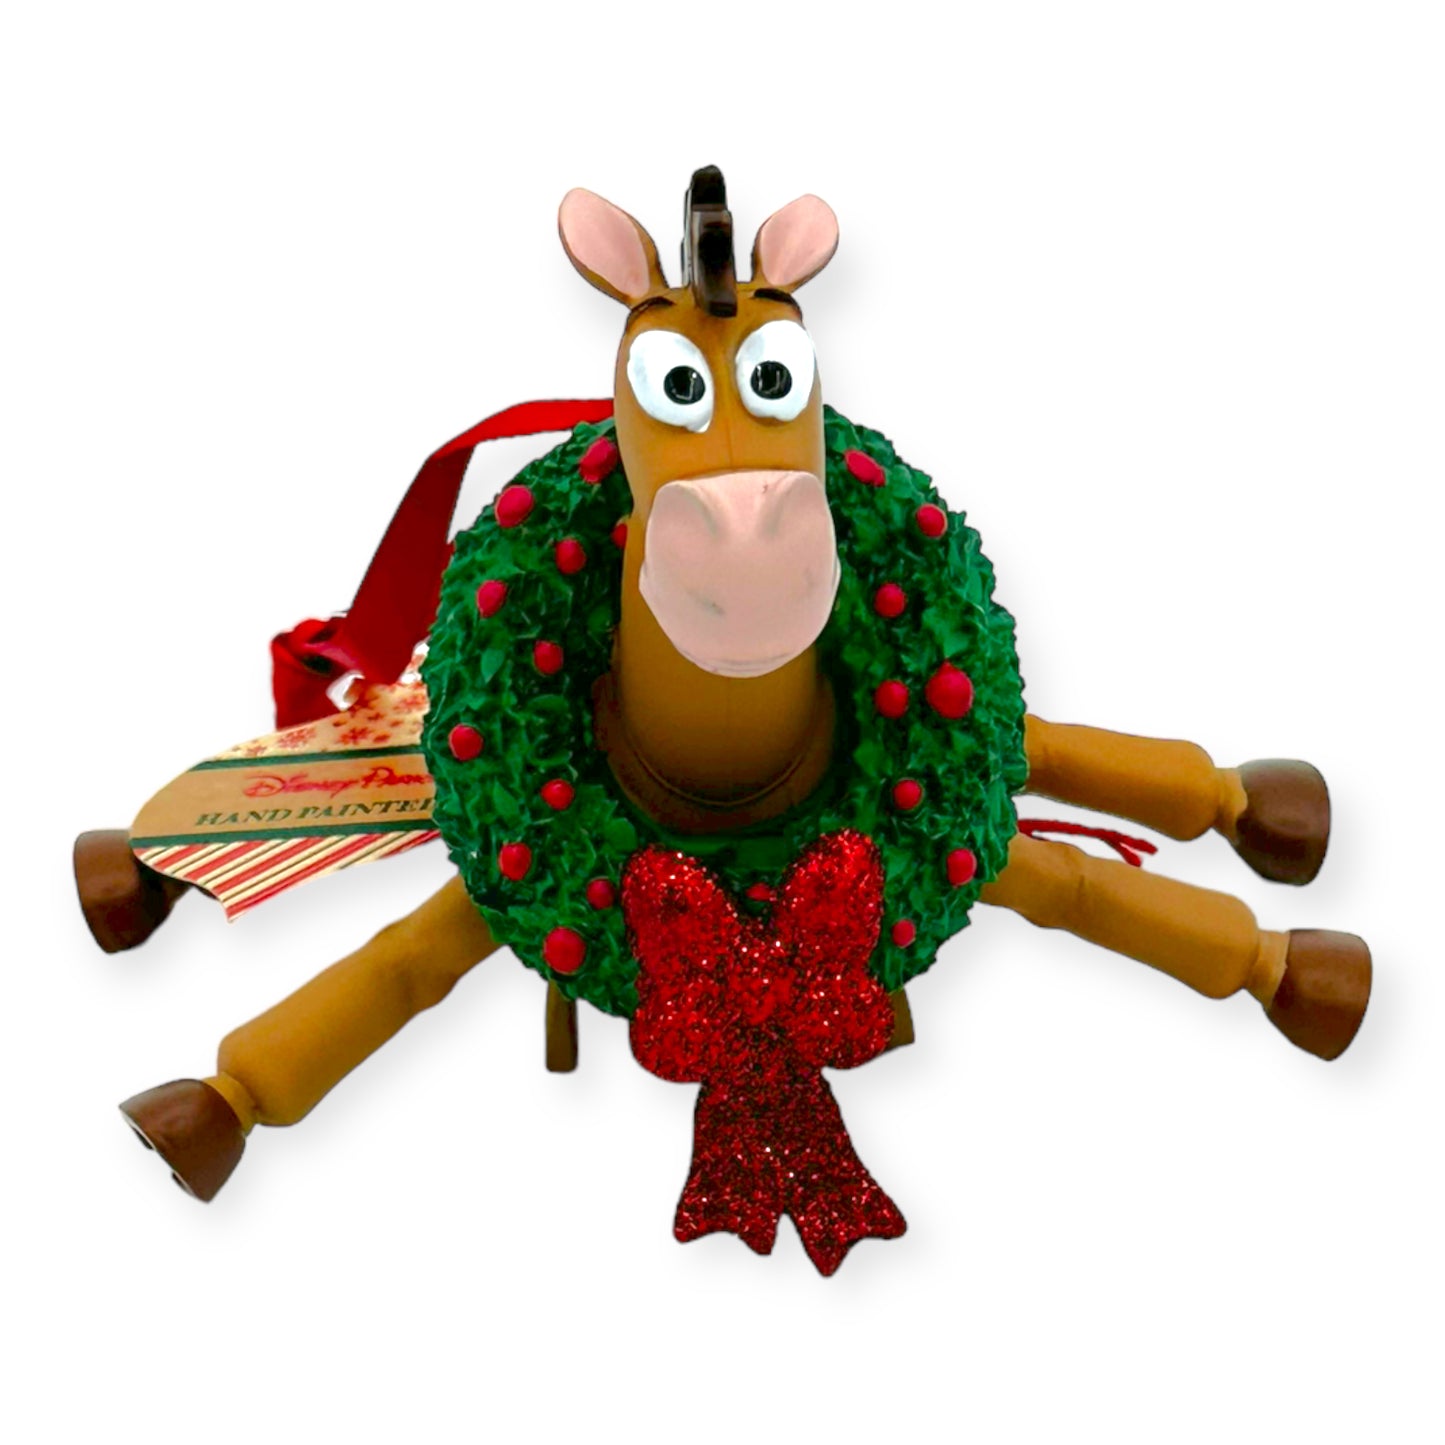 Bullseye Disney Articulated Figural Ornament - Toy Story